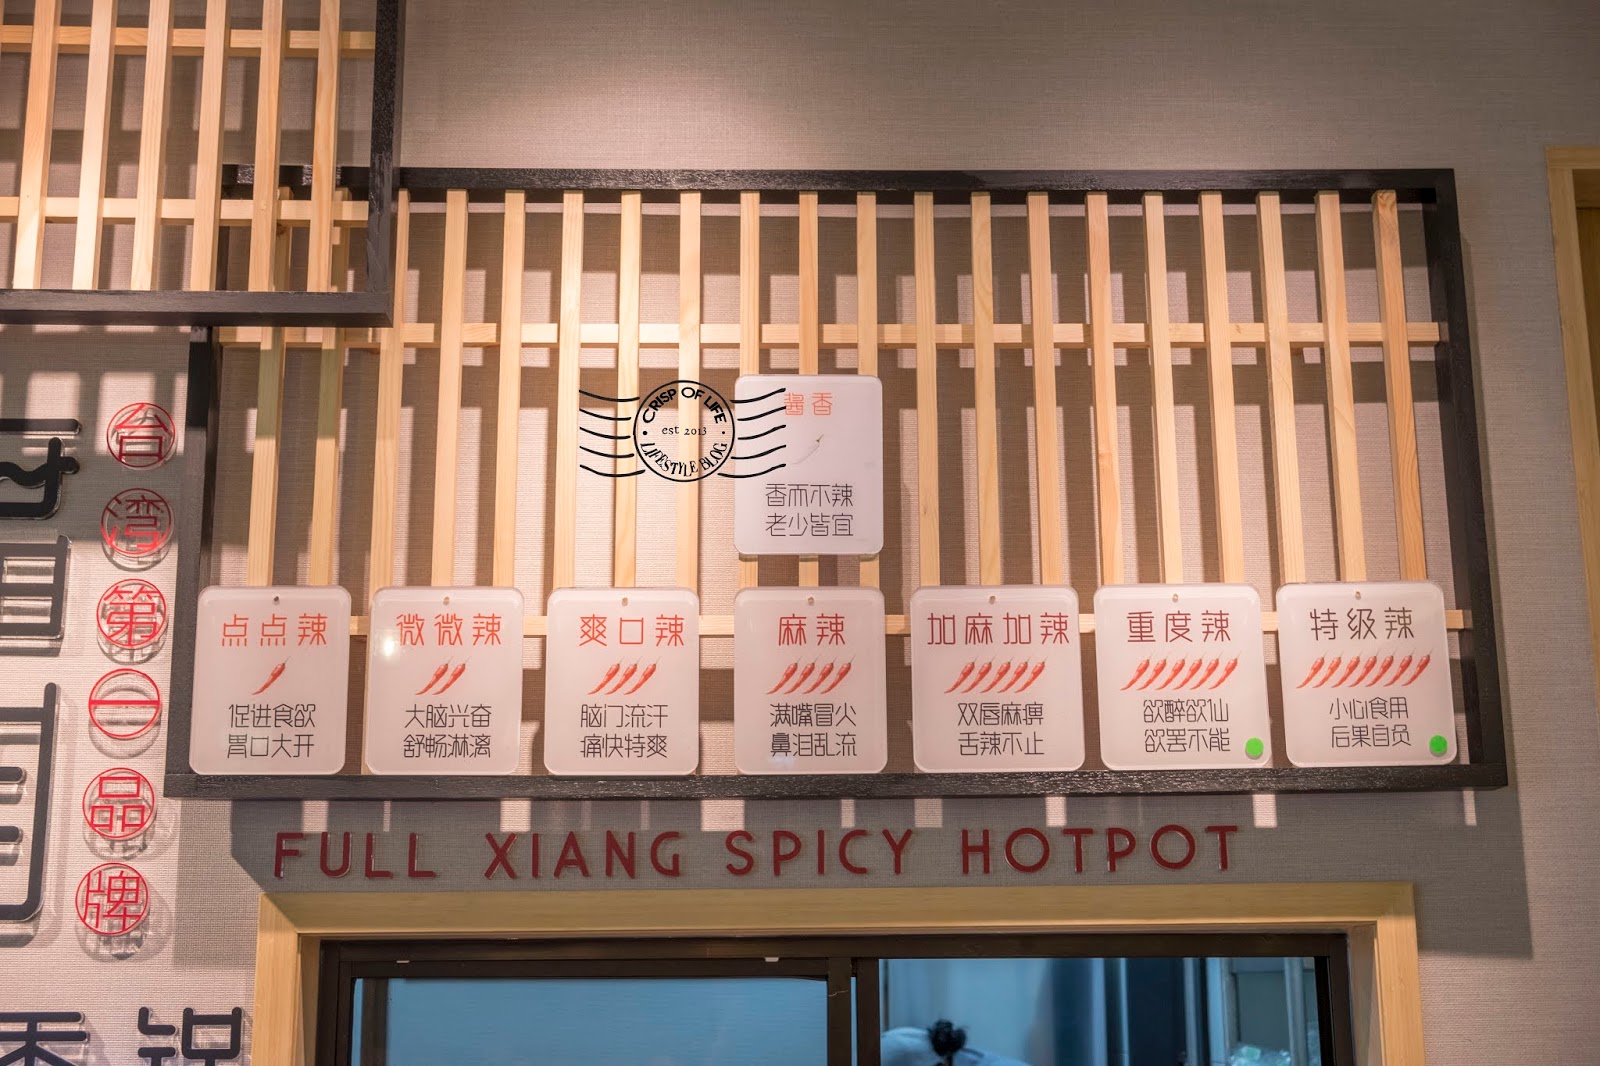 Full Xiang Spicy Hotpot 福相麻辣香锅 @ Queensbay Mall, Penang